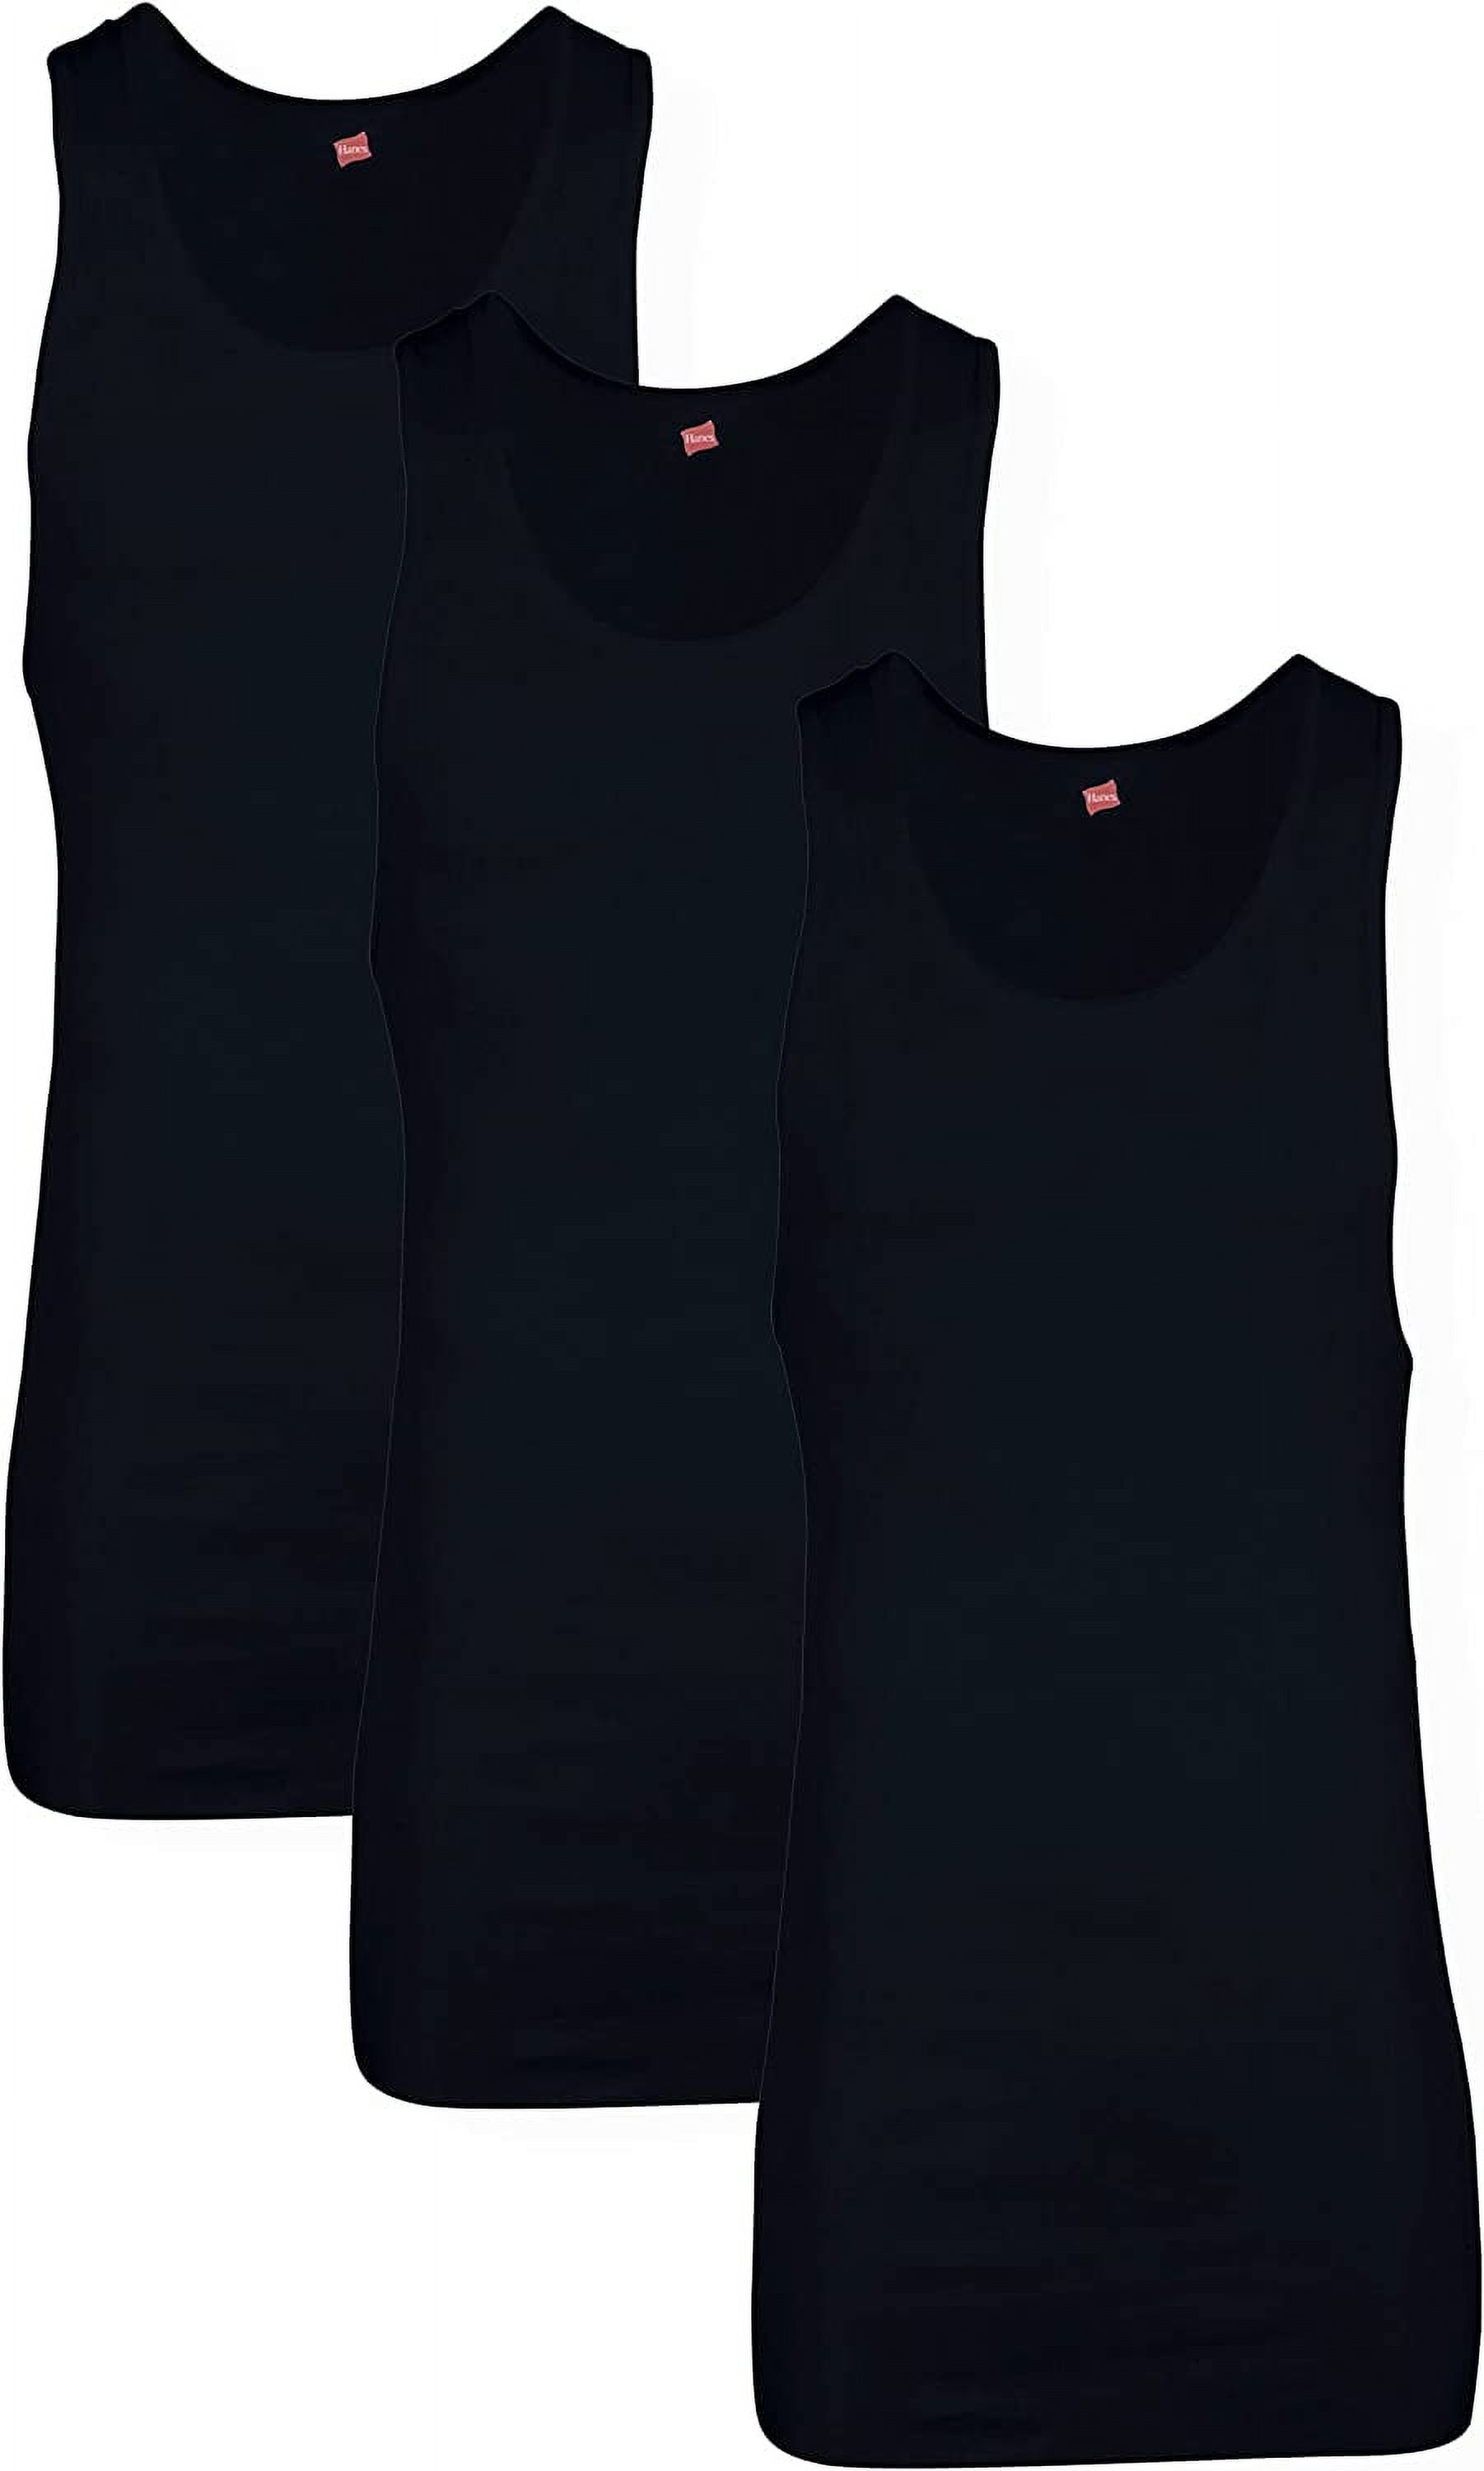 Hanes Men's Tall Man A-Shirt Tank Top, Black, 6X-Large/Tall (Pack of 3 ...